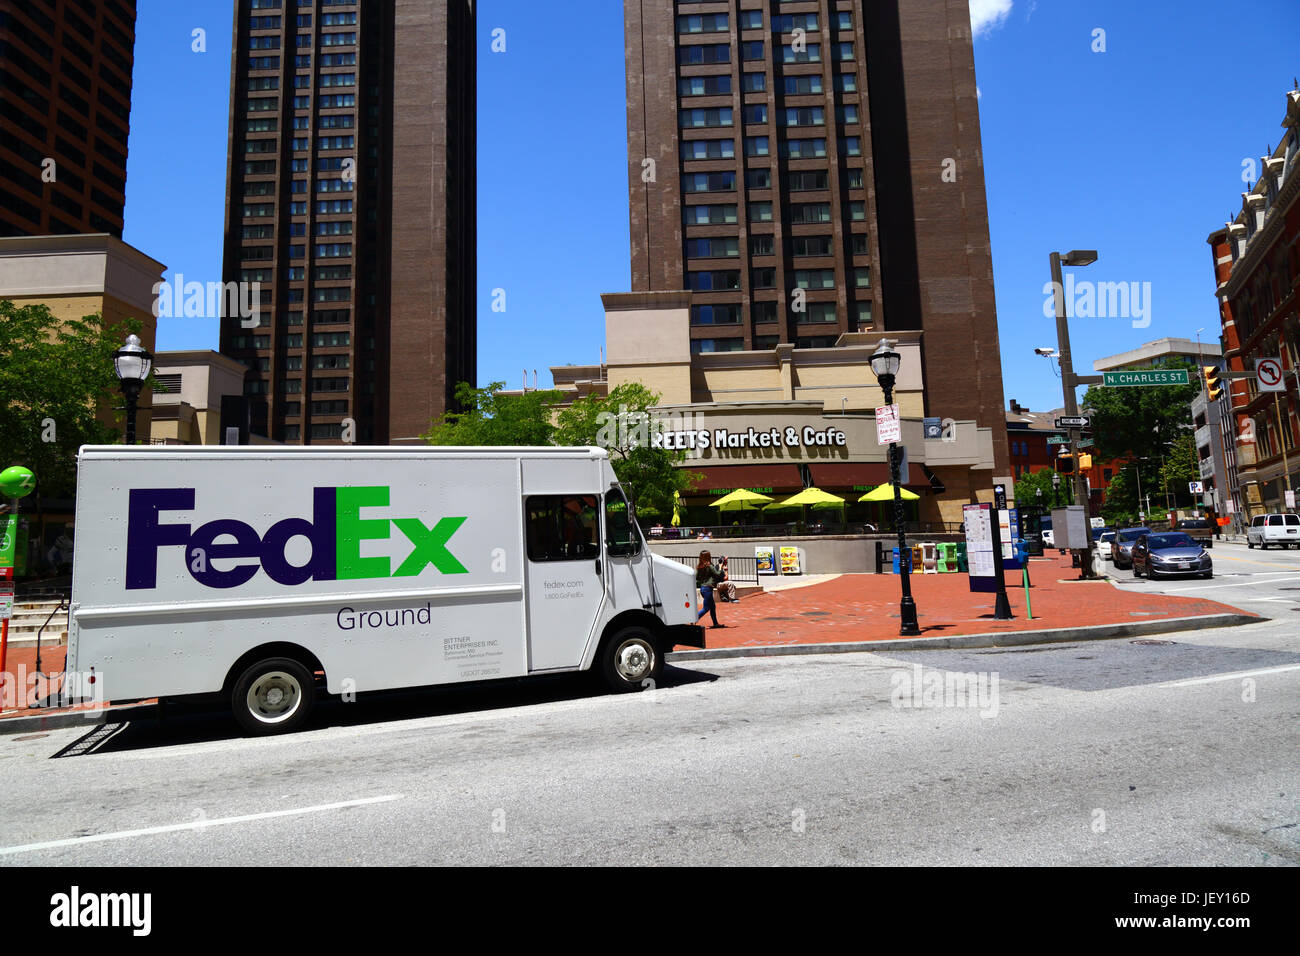 FedEx Ground Delivery van garé devant Streets Market and Cafe, Charles Towers en arrière-plan, North Charles Street, Baltimore, Maryland, États-Unis Banque D'Images